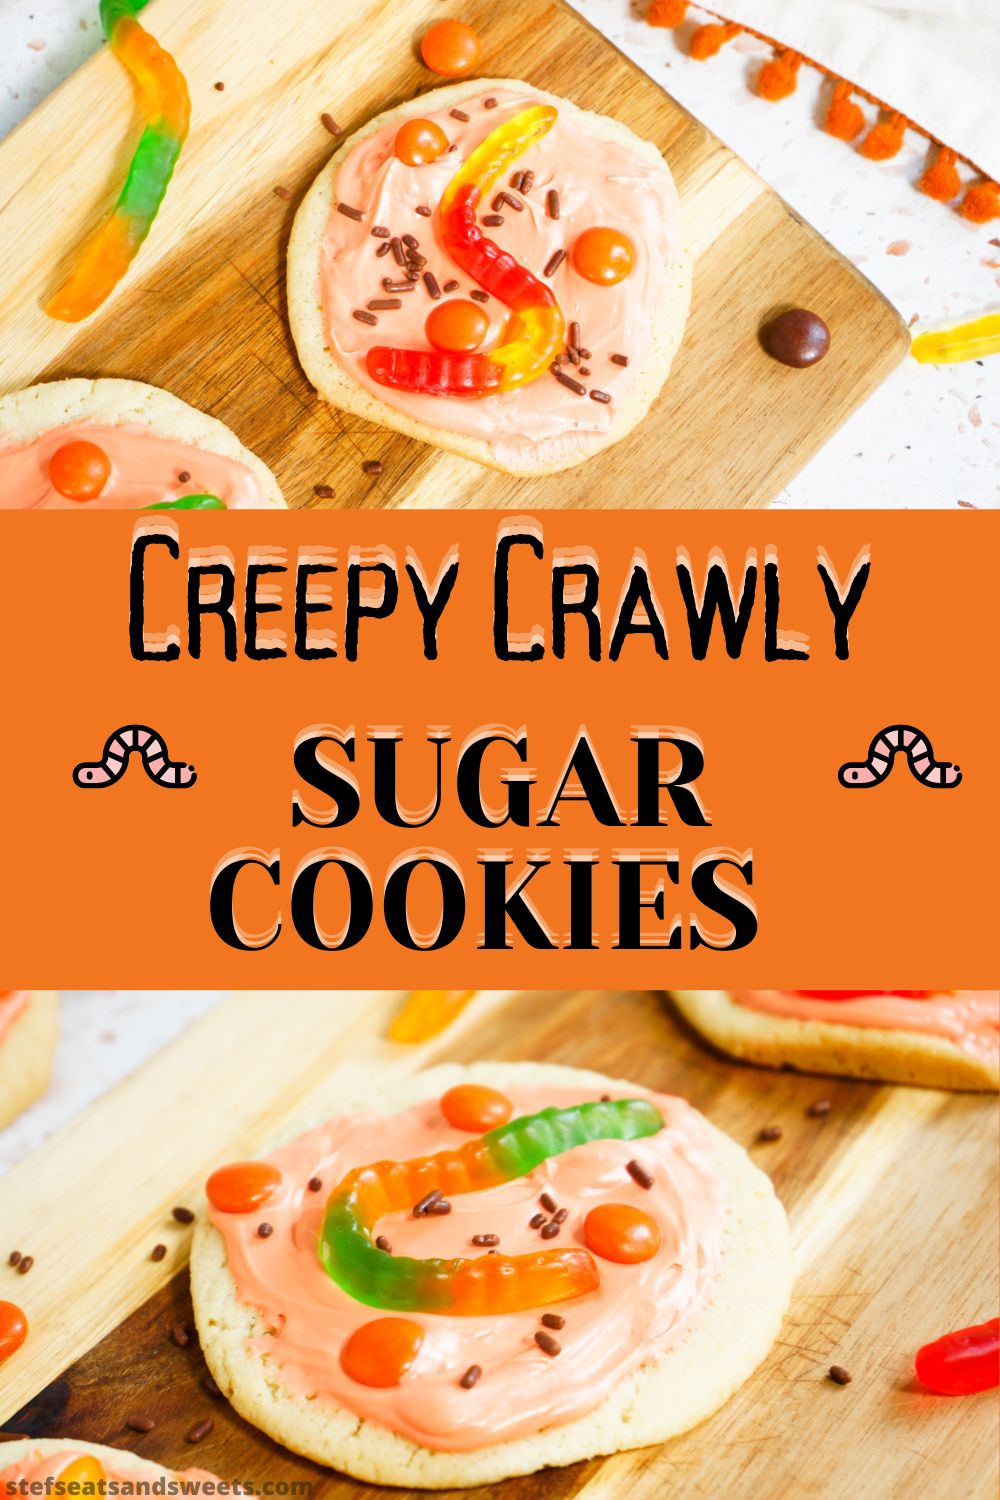 Festive Creepy Crawly Sugar Cookies 